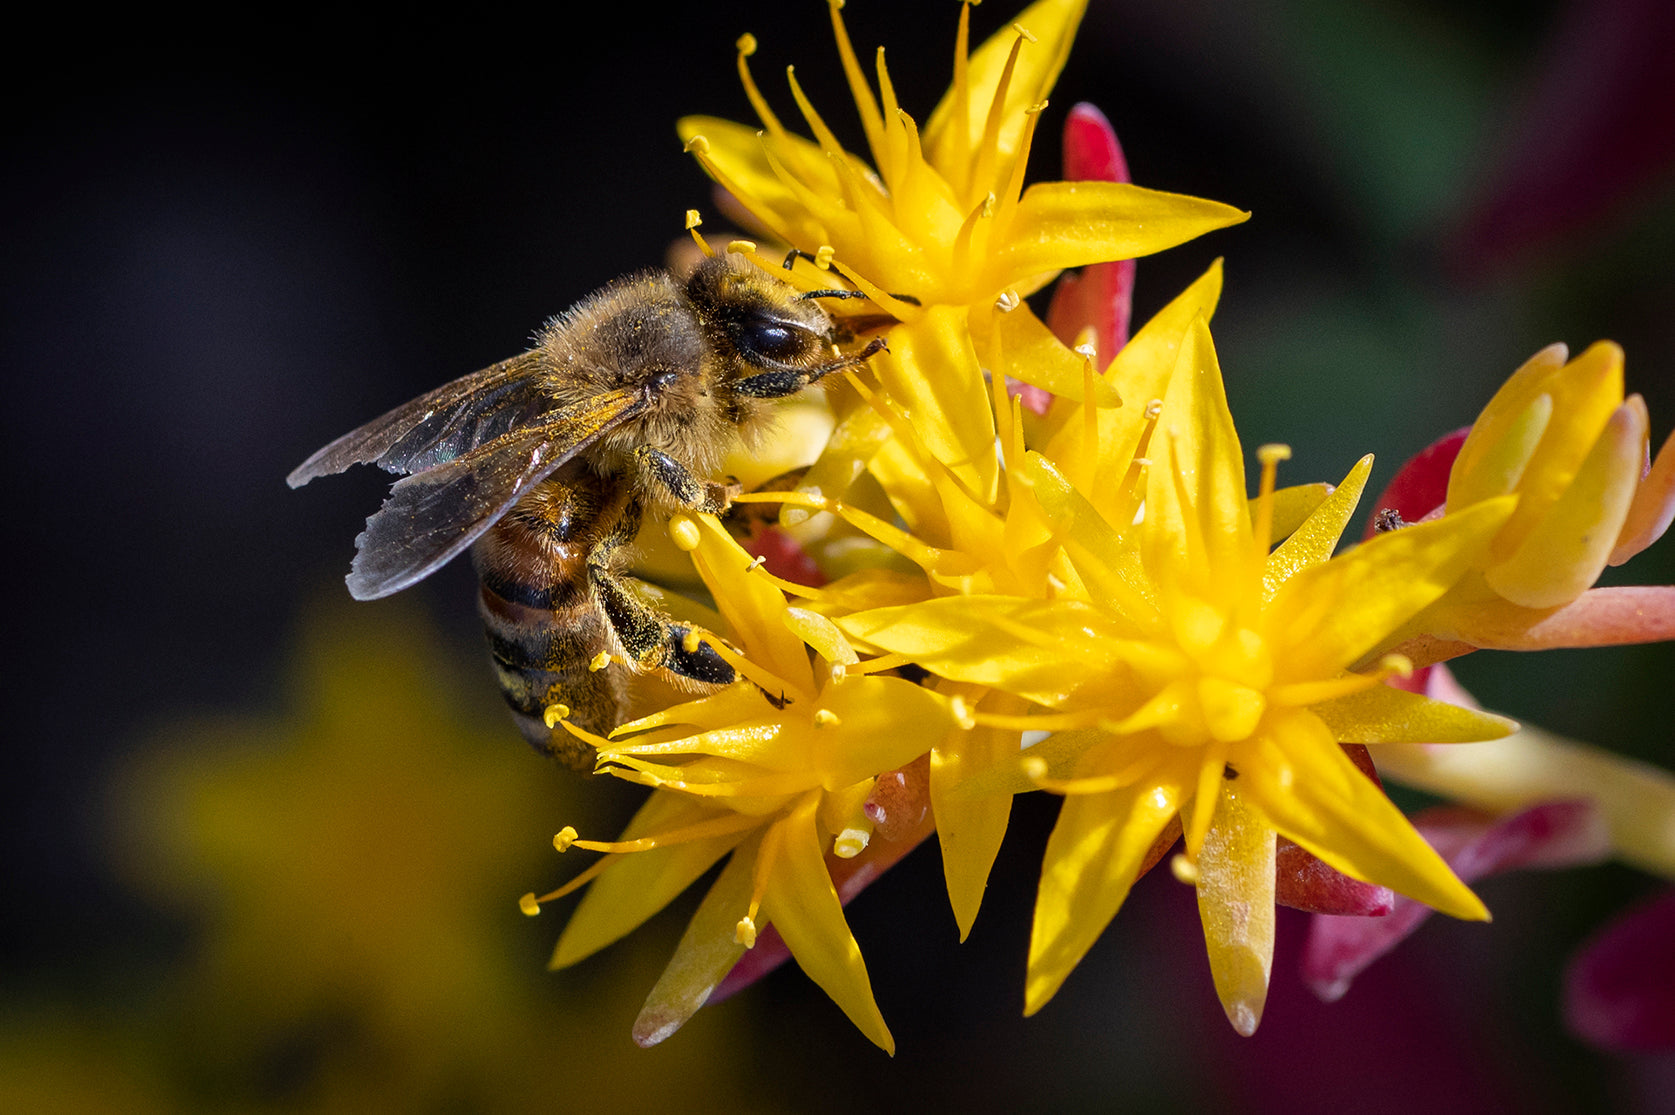 bee, wasp, help, avoid harming, flowers, garden, safe